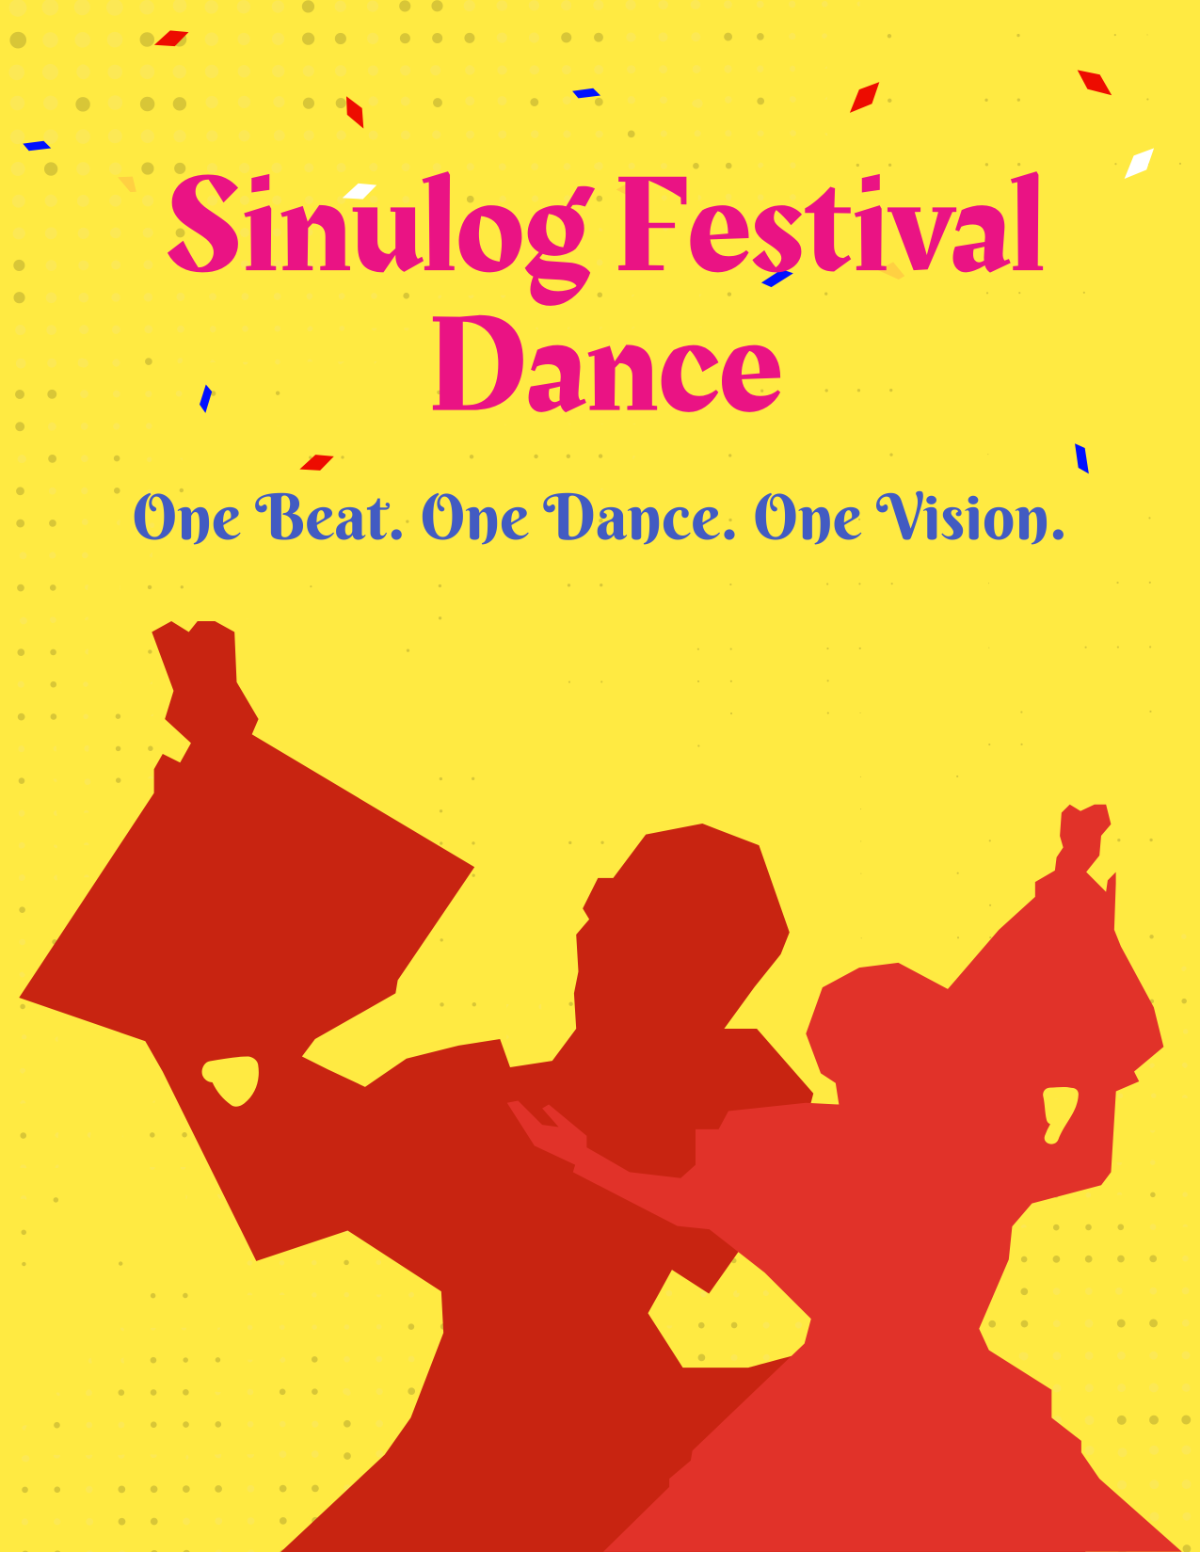 Free Sinulog Festival Dance Flyer Template